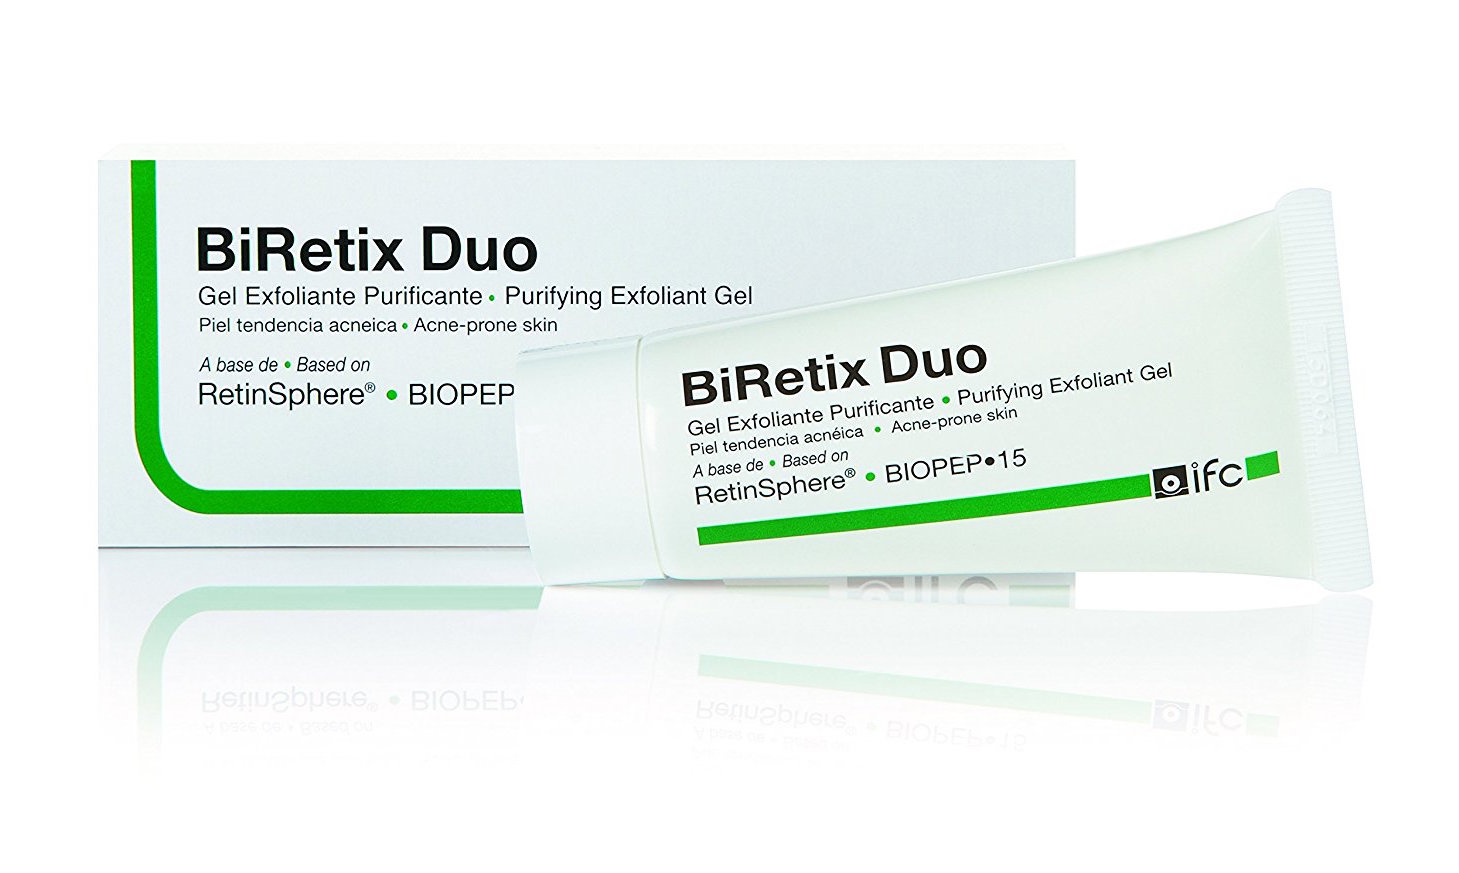 Duo gel. BIRETIX Duo. Муфлексин дуо гель. BIRETIX система. BIRETIX Duo - Purifying Exfoliant Gel - себорегулирующий гель, 30 мл.